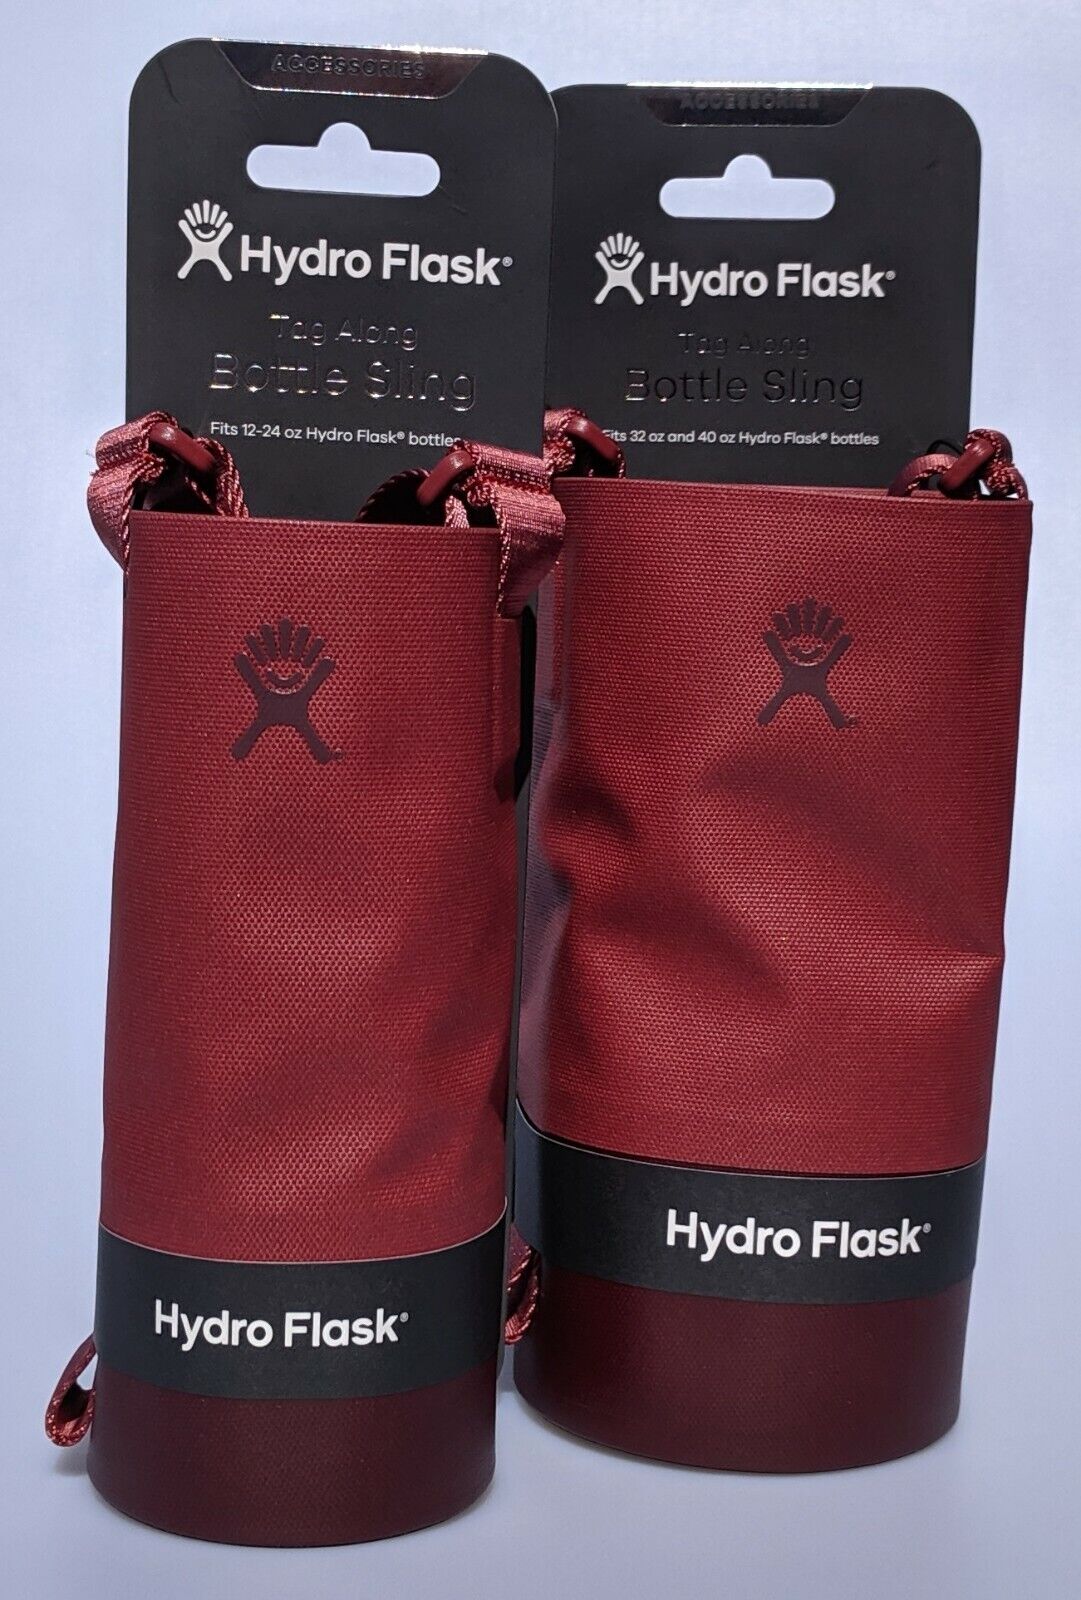 Hydro Flask TAG ALONG Bottle Sling Lava Fits 12-24 Oz Bottles